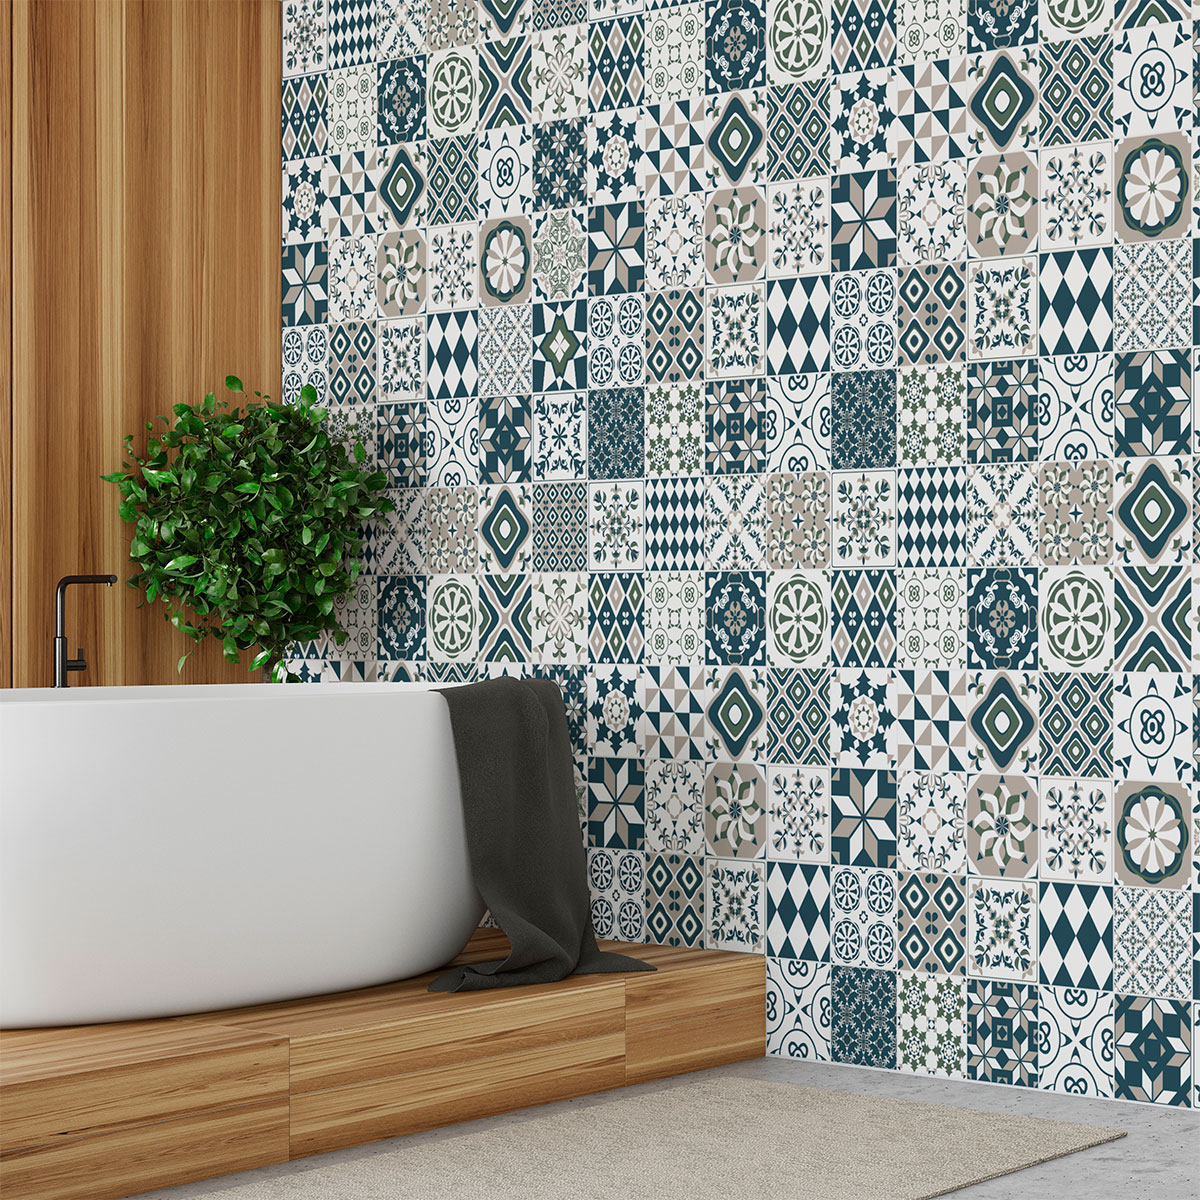 60 wall decal tiles azulejos jeromea